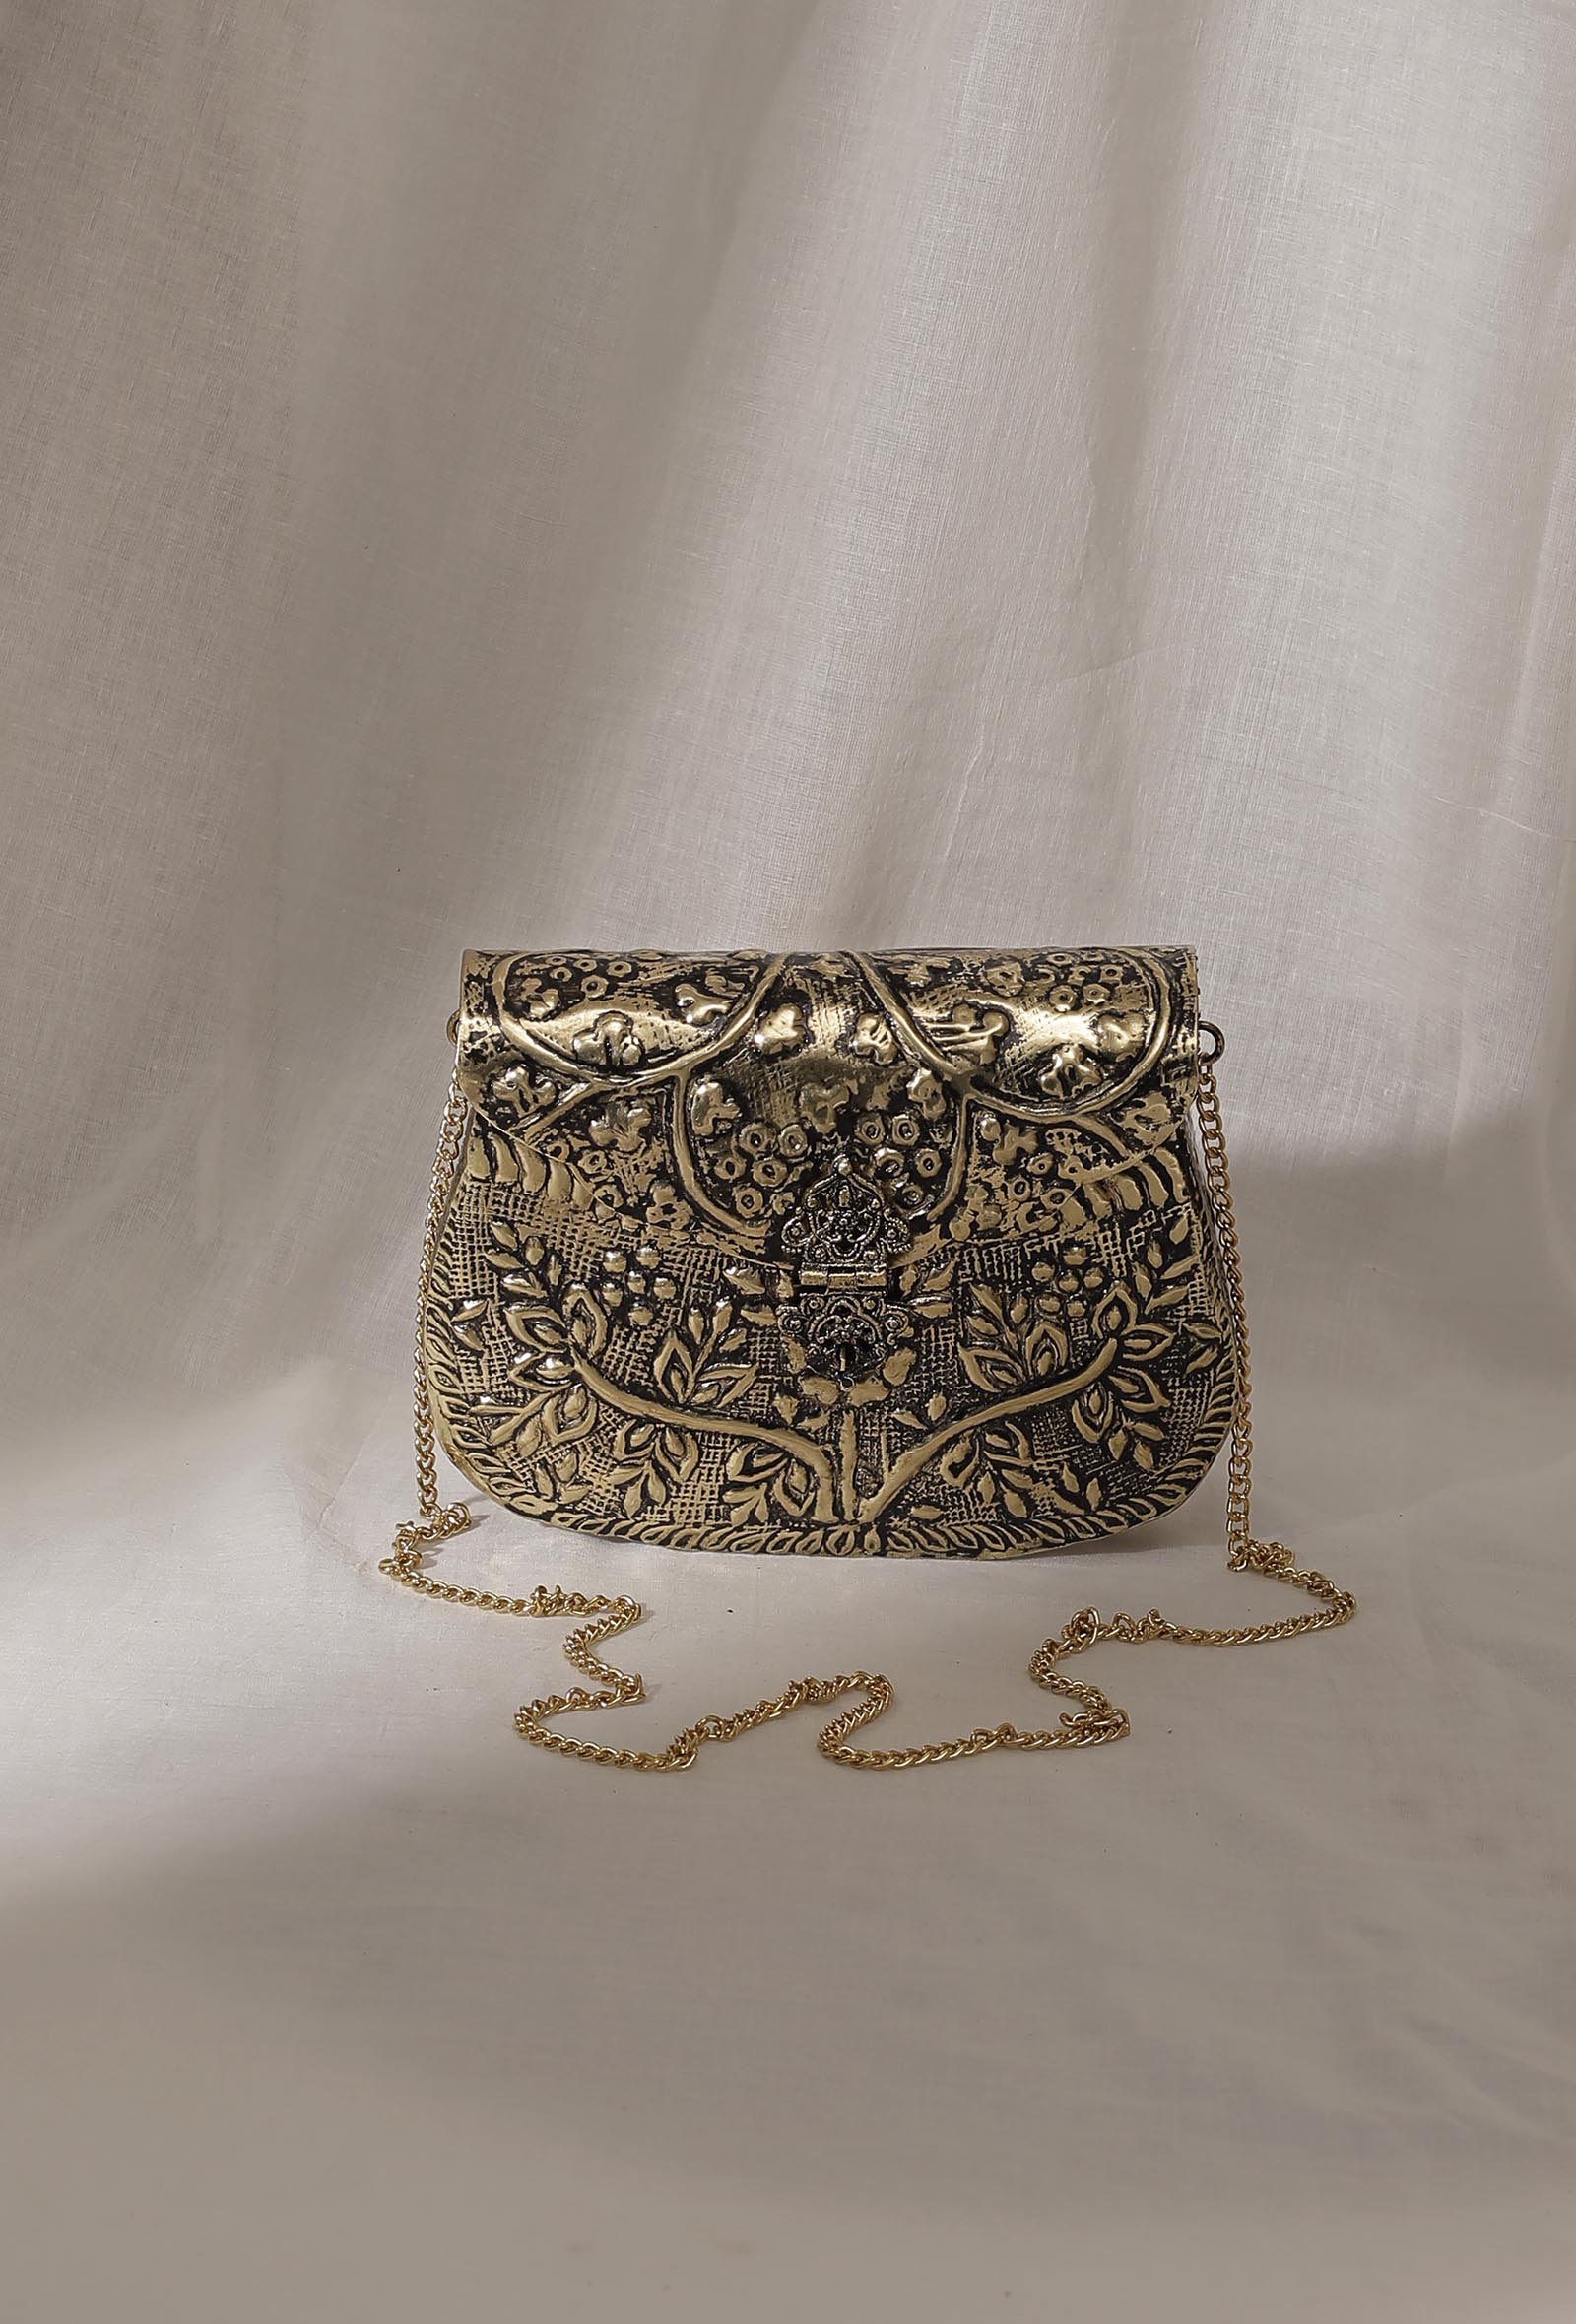 fcity.in - Handicraft Stylish Trendy Beautiful Clutch Bag Purse For Wedding